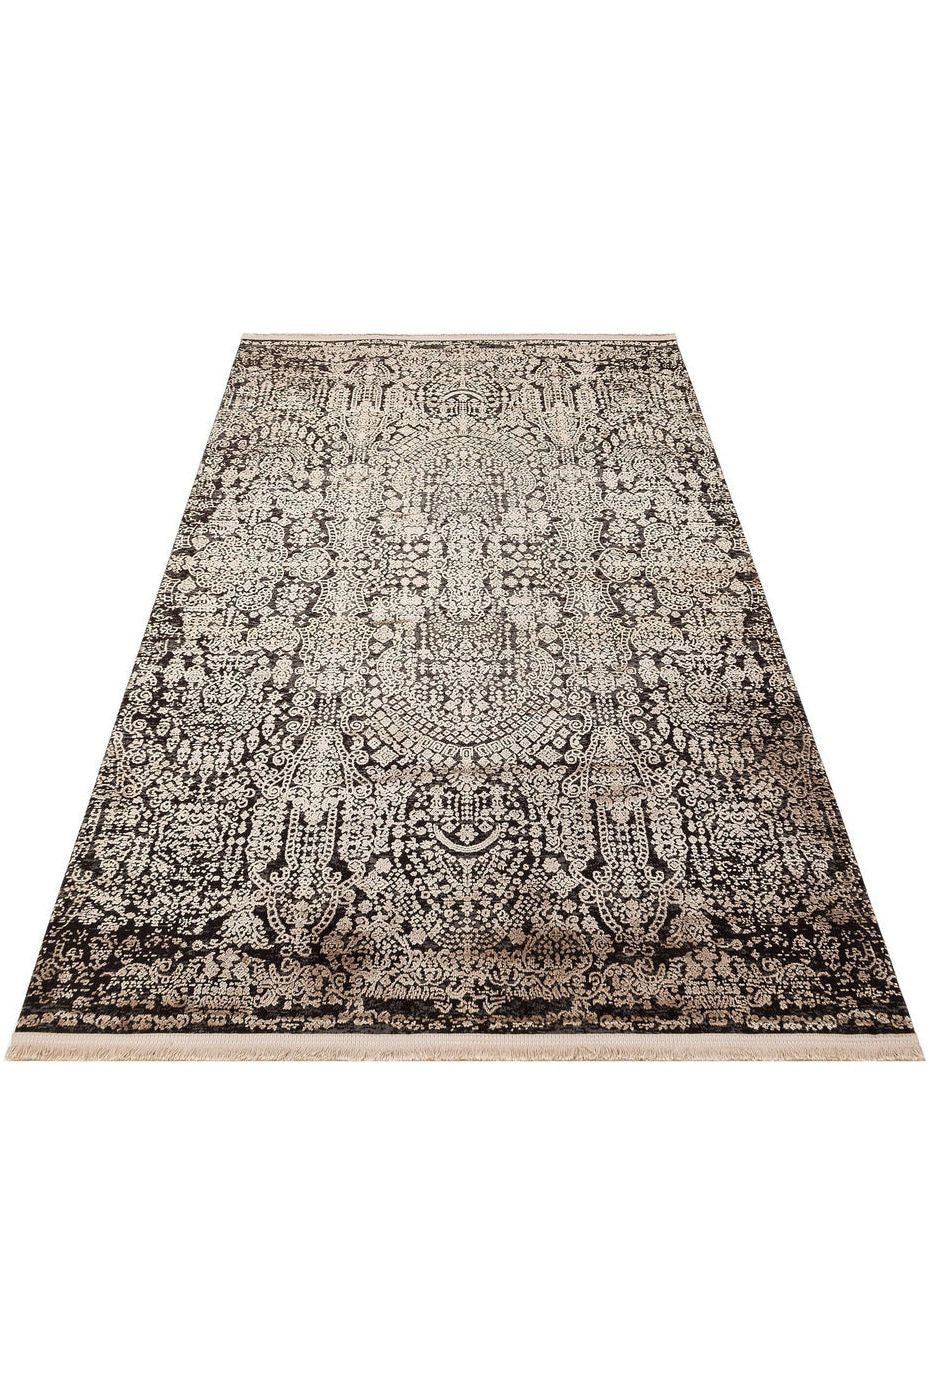 #Turkish_Carpets_Rugs# #Modern_Carpets# #Abrash_Carpets#Db 04 Antrasit Vizon